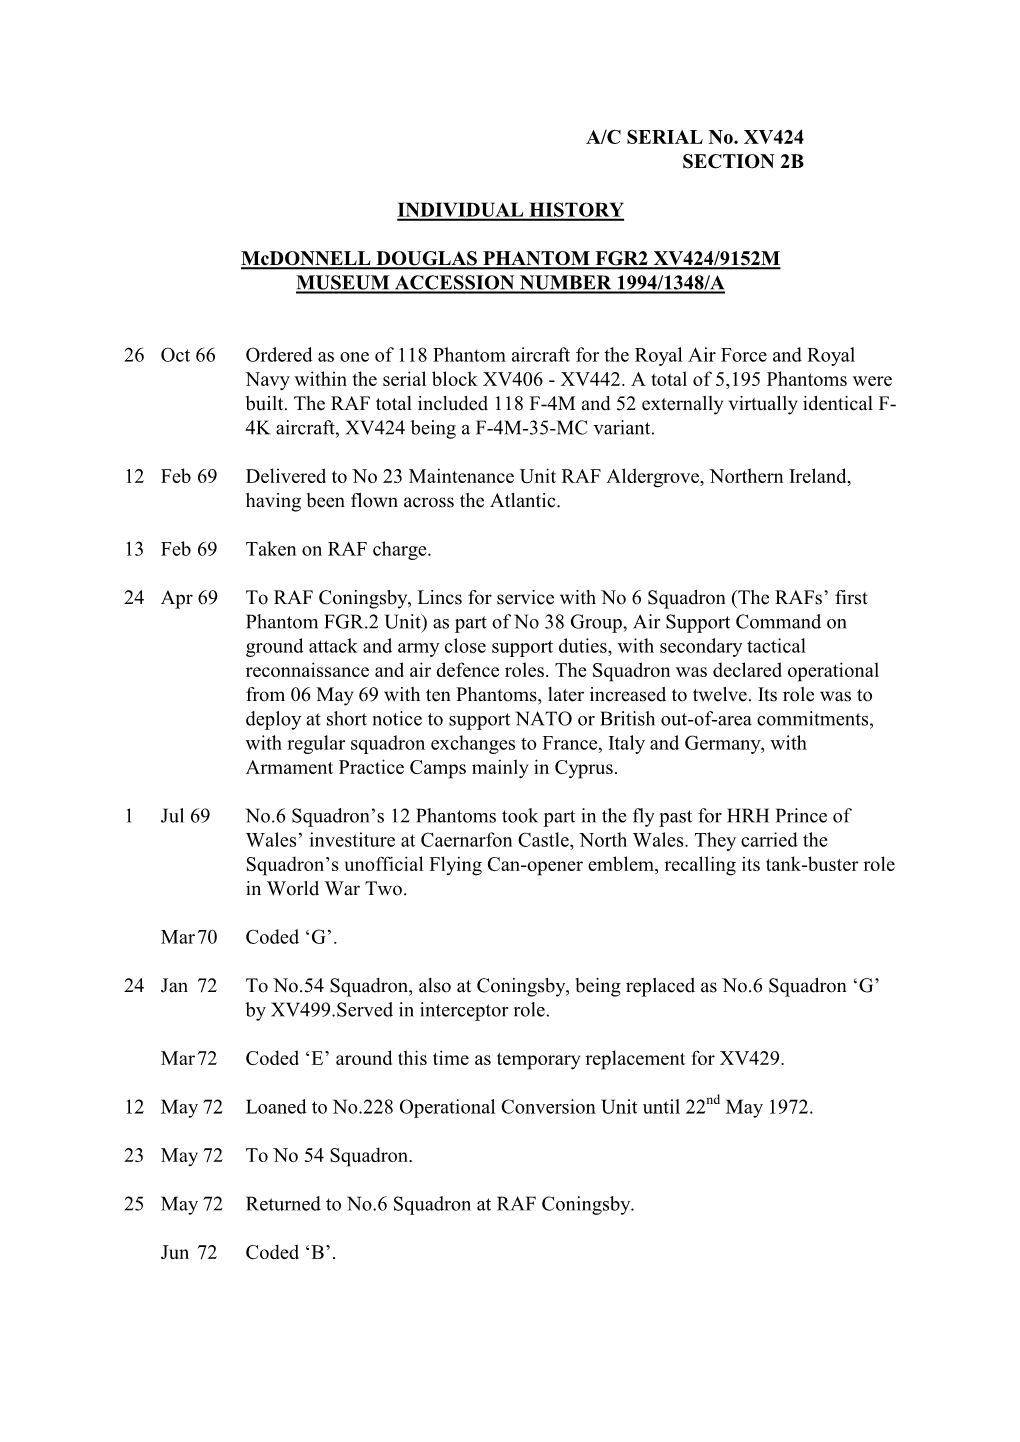 Mcdonnell DOUGLAS PHANTOM FGR2 XV424/9152M MUSEUM ACCESSION NUMBER 1994/1348/A